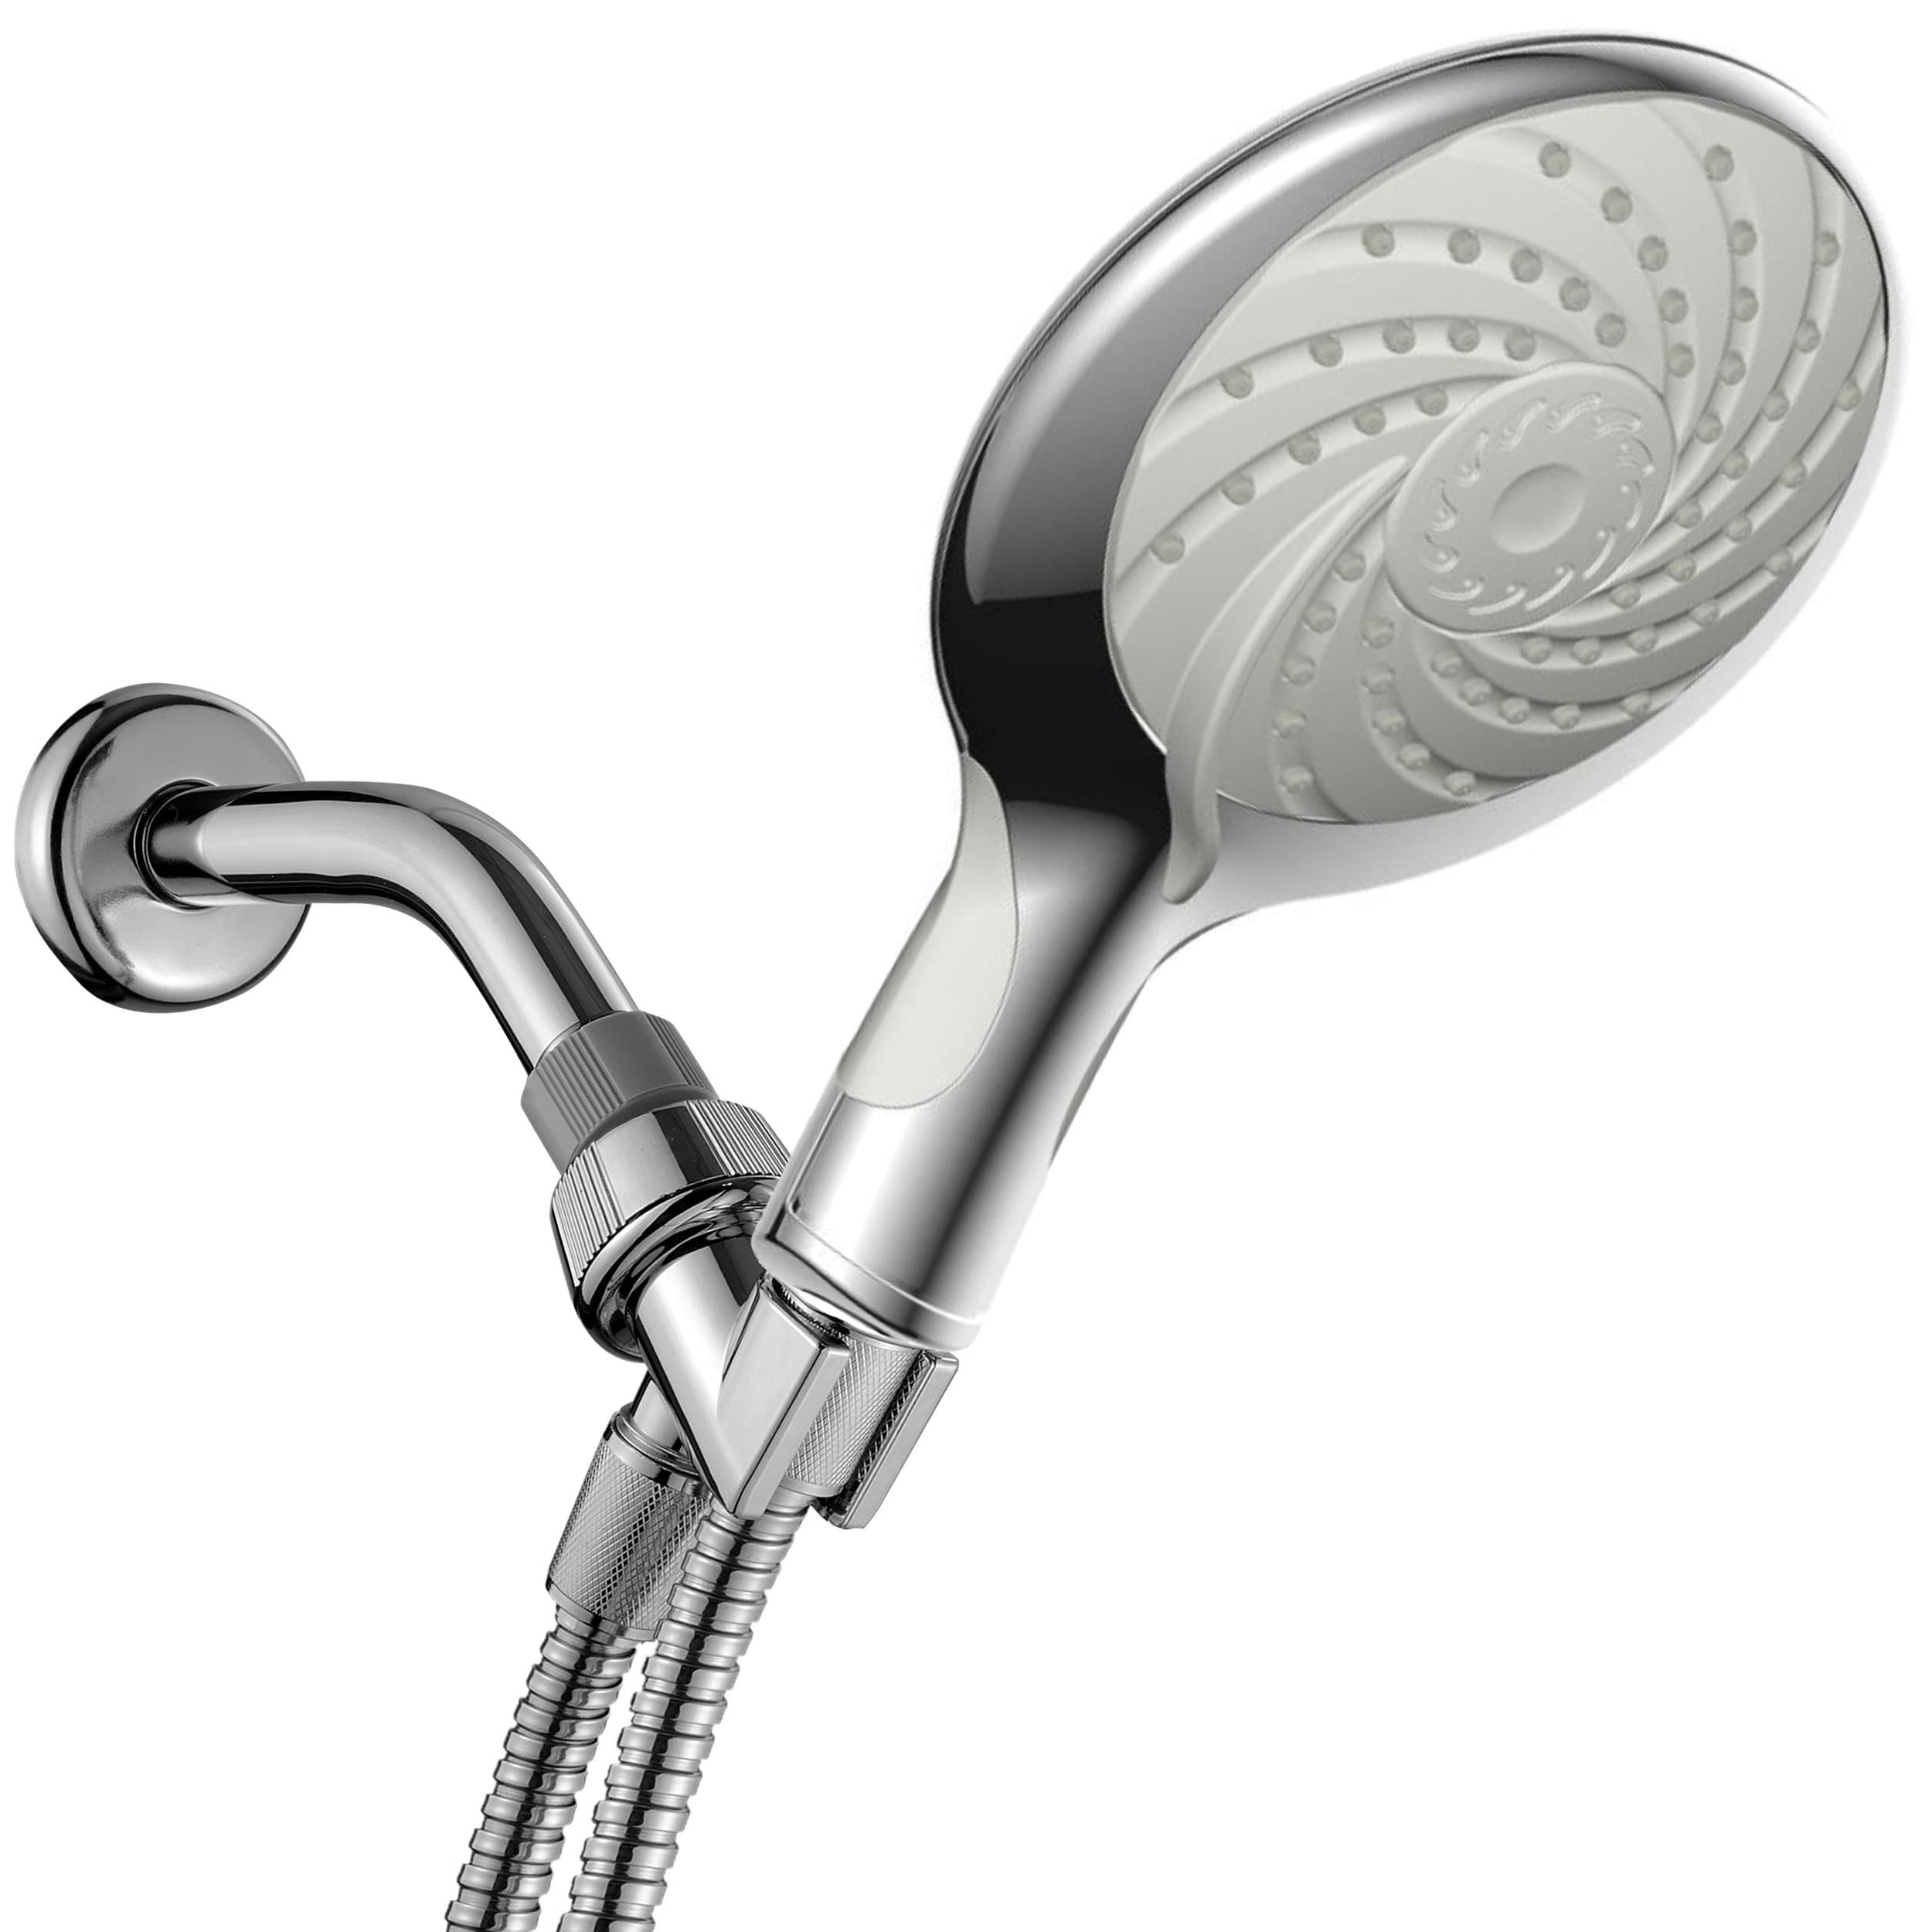 5 Spray Modes Universal Handheld Shower Head Never Clog and Full-Chrome Shower Head Spray for Bathroom Self-cleaning Autkors Shower Head